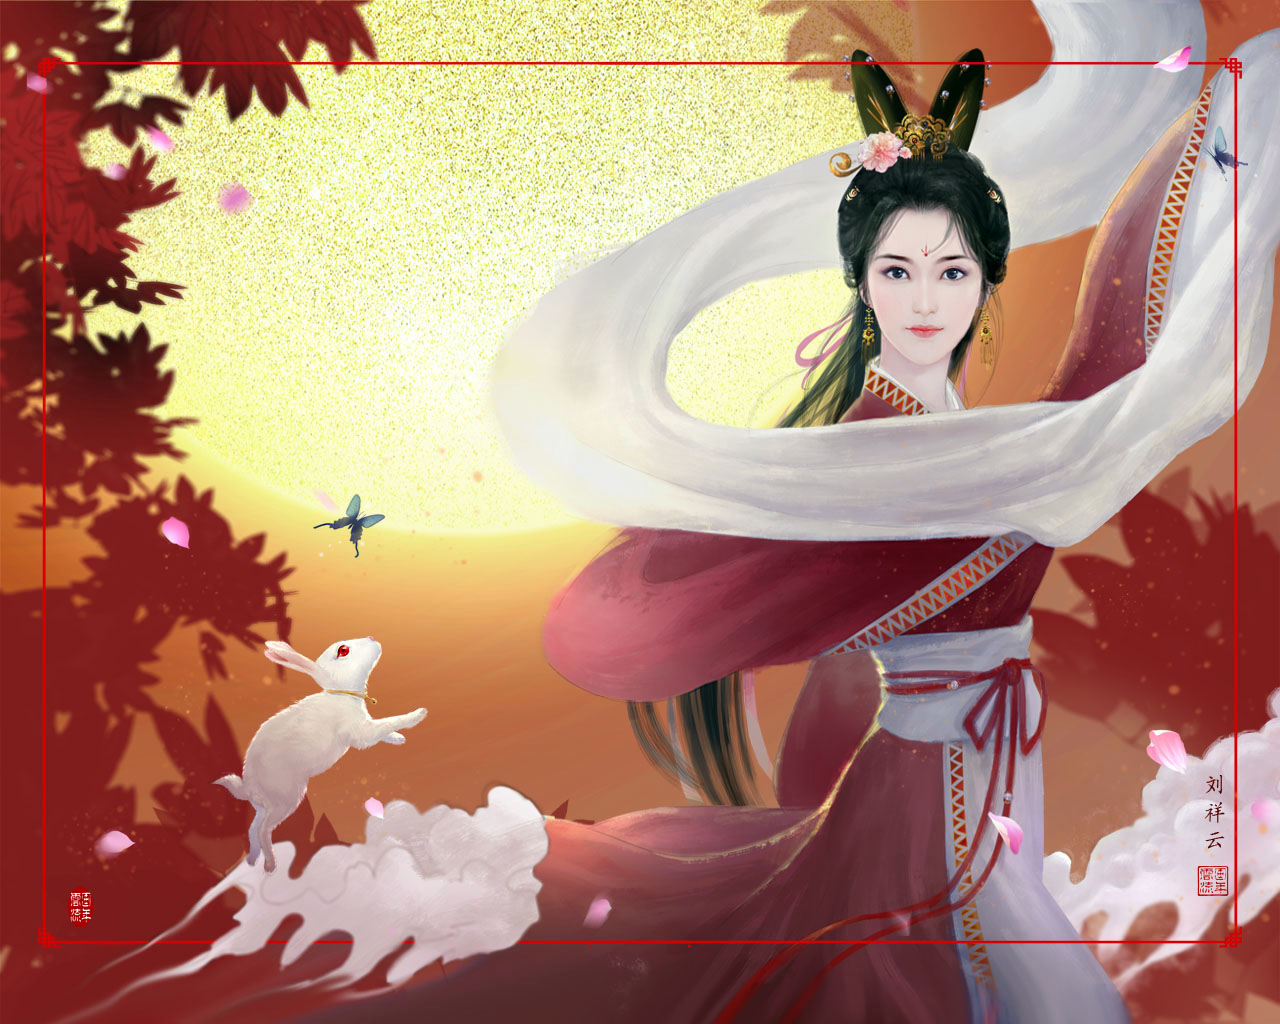 General 1280x1024 digital art original characters fantasy girl hiLiuyun